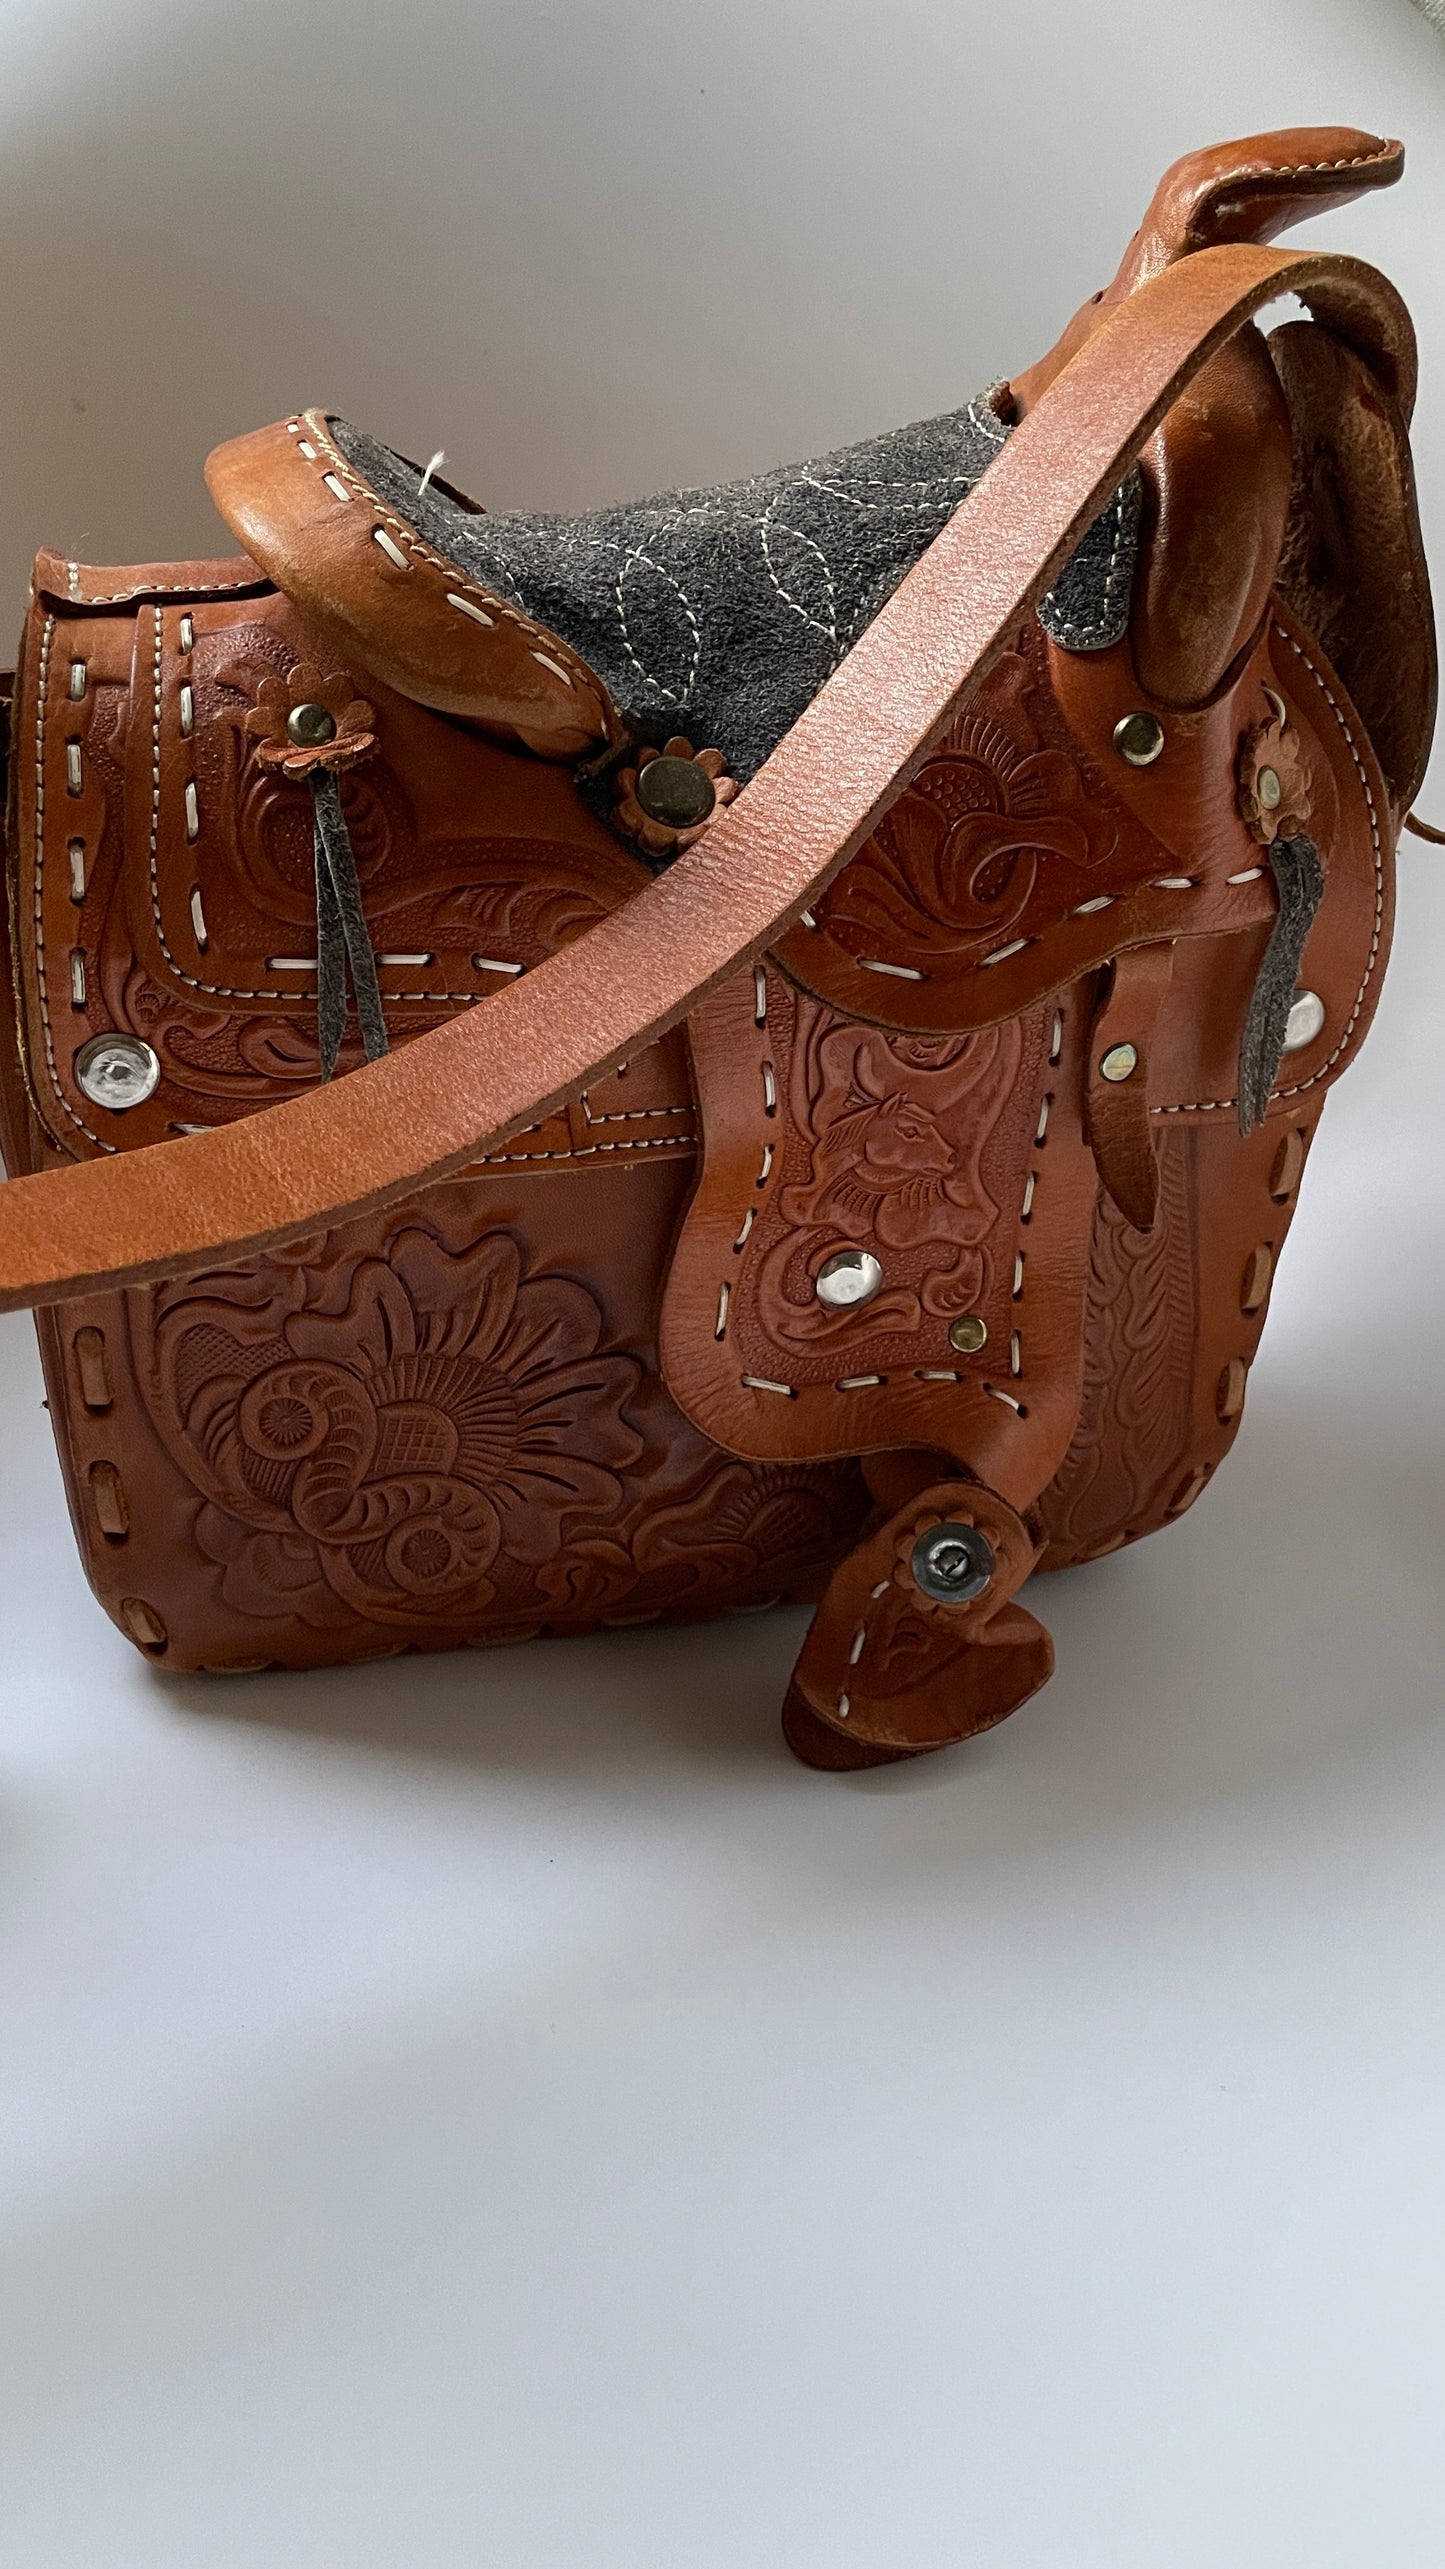 Tooled saddle bag